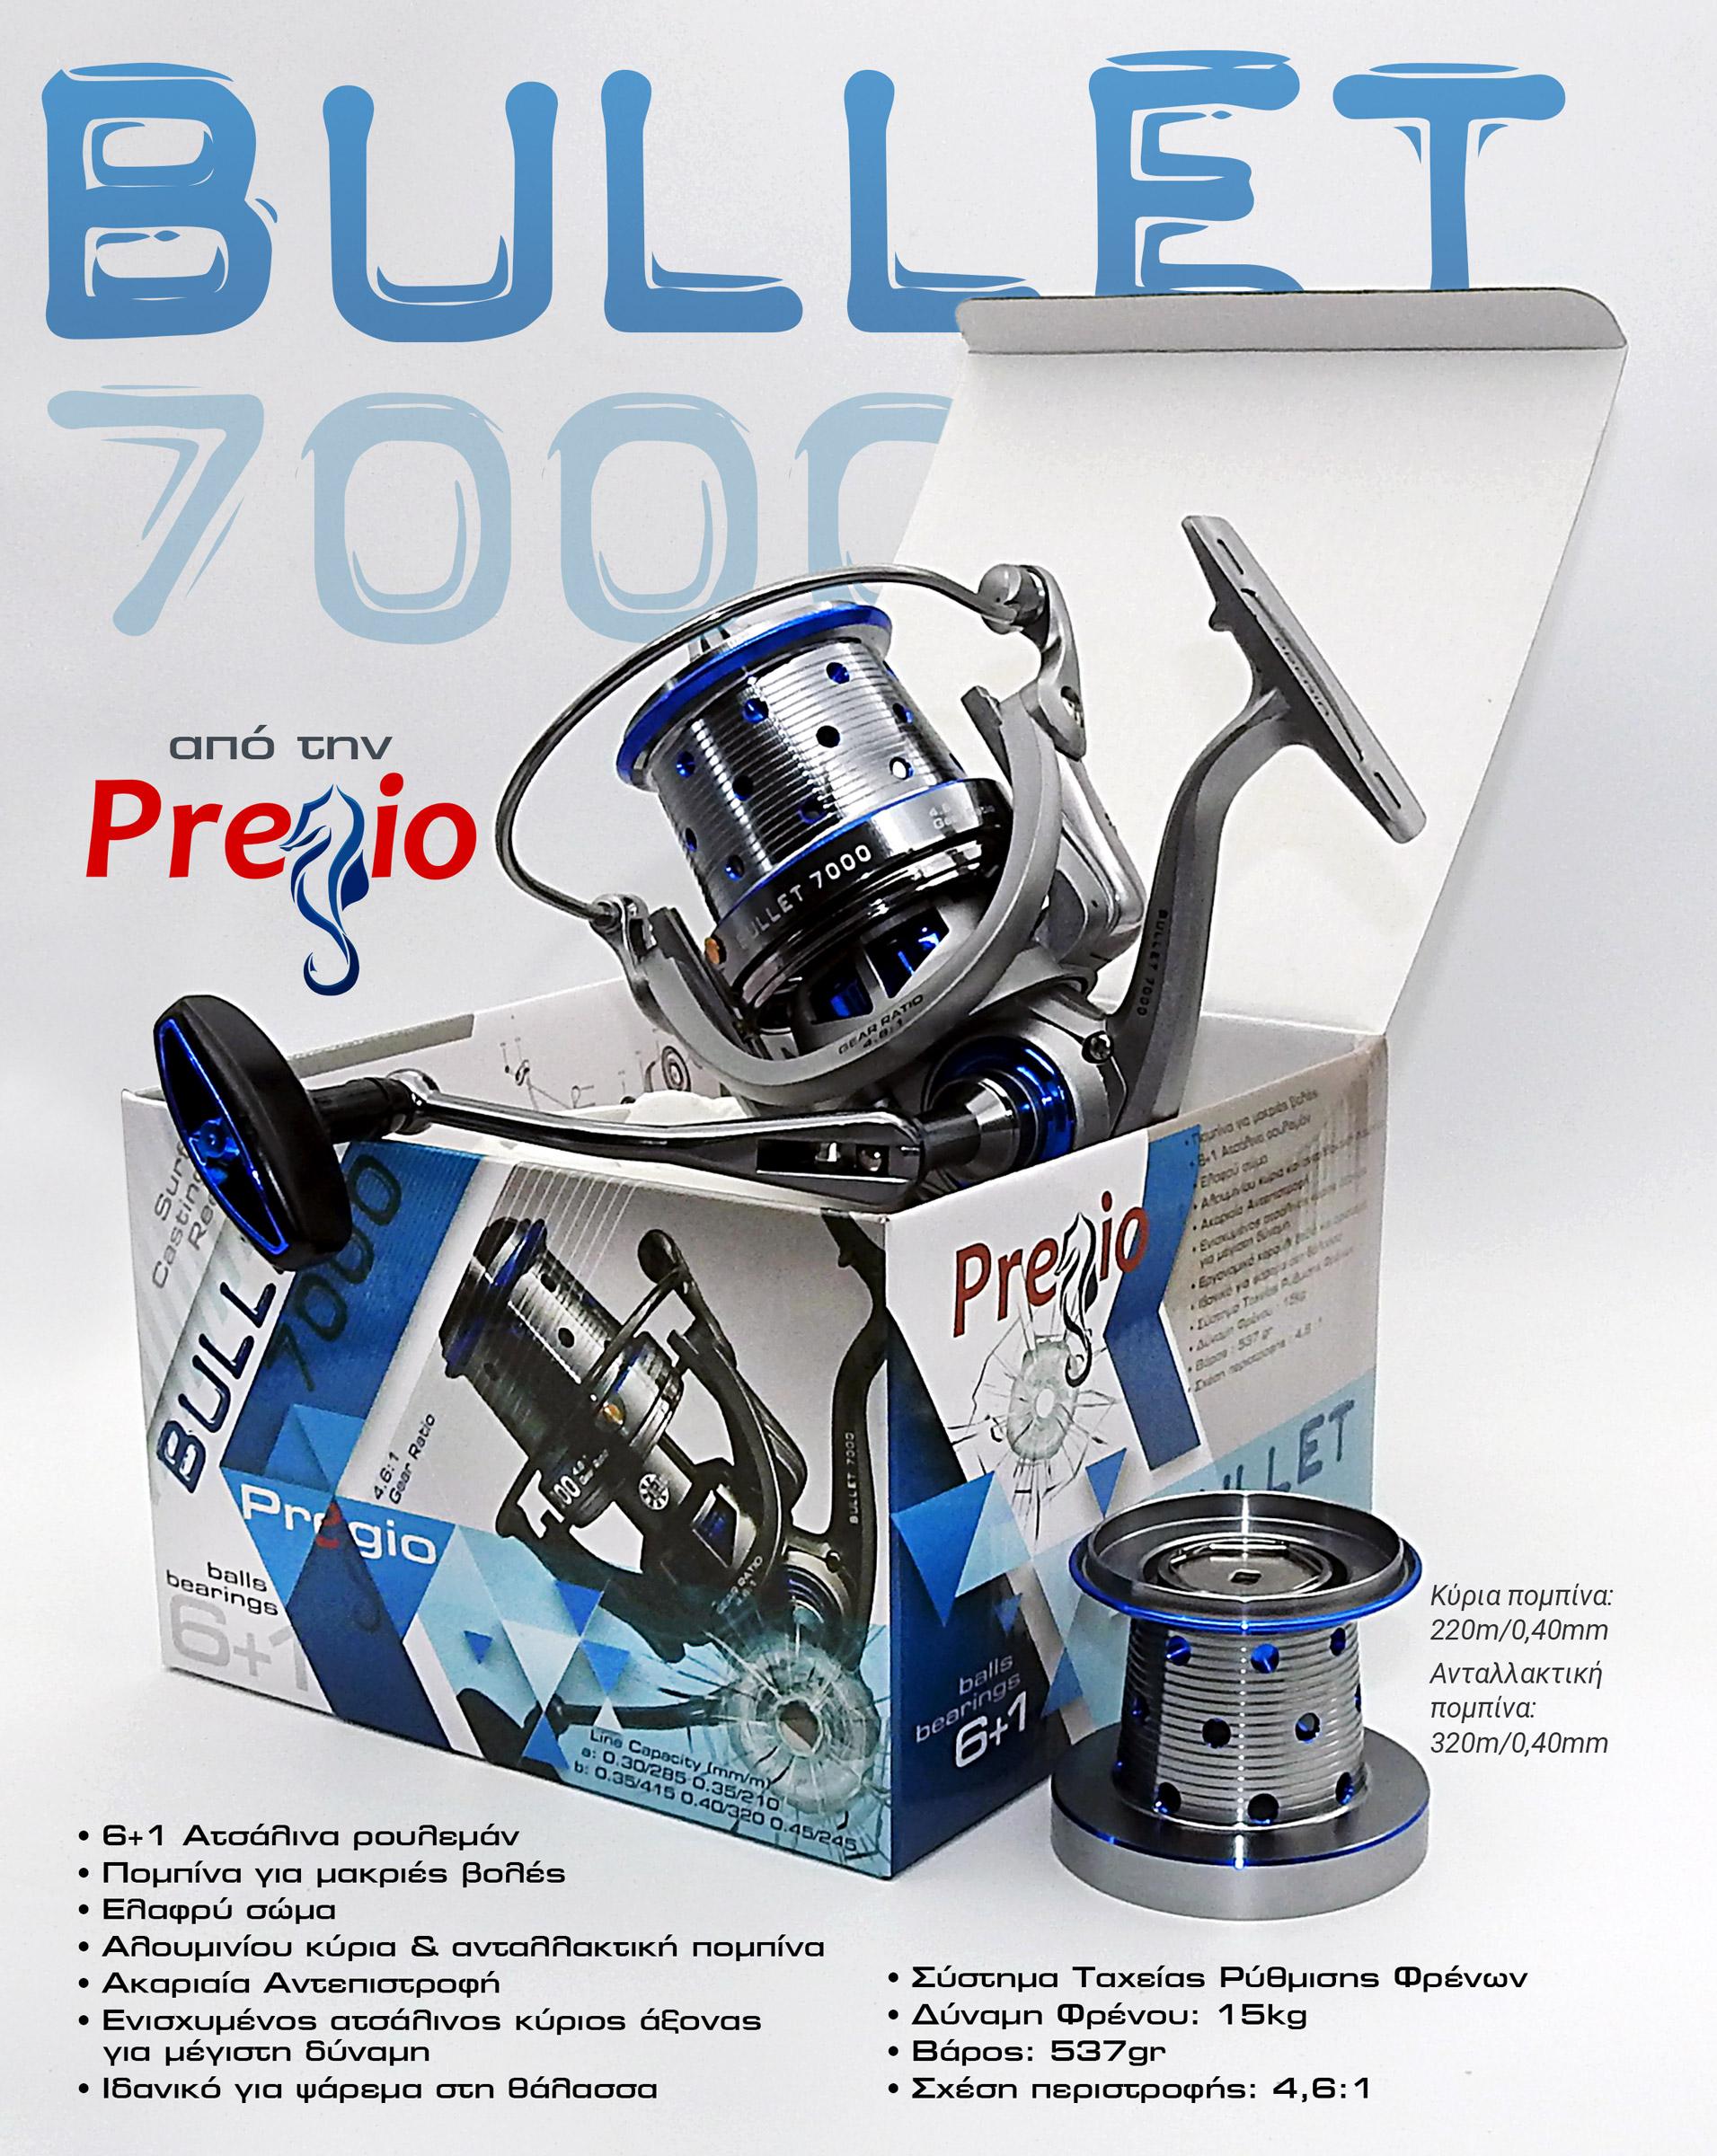 Fishing Reels - Surf Casting Reels - Fishing Reel Pregio Bullet-7000